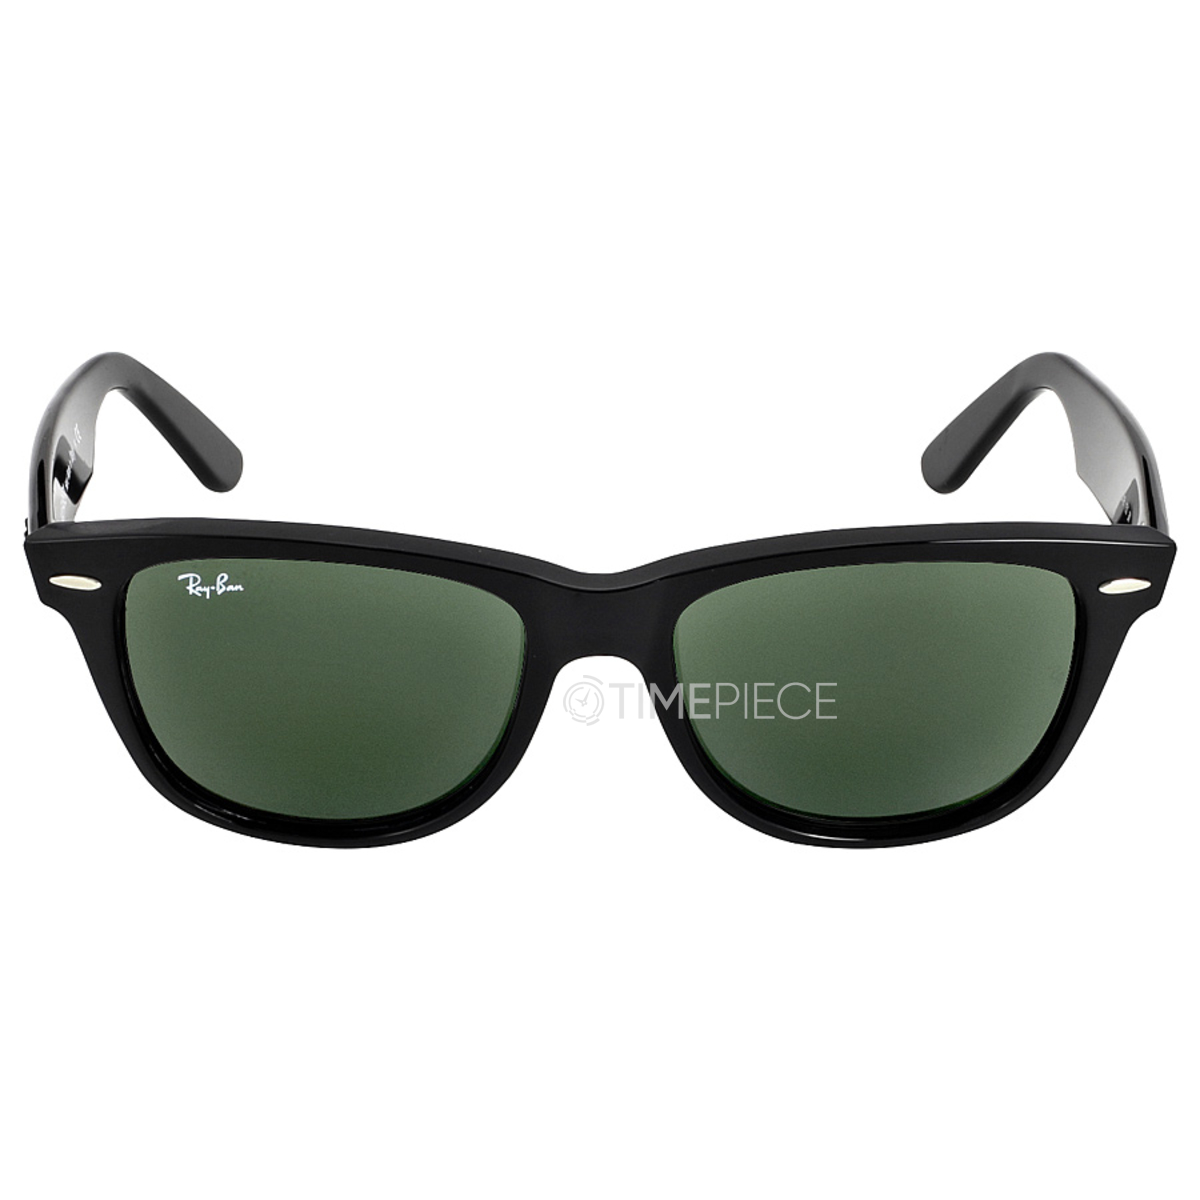 Ray Ban Original Wayfarer Classic Green G-15 Unisex Sunglasses RB2140 901 54